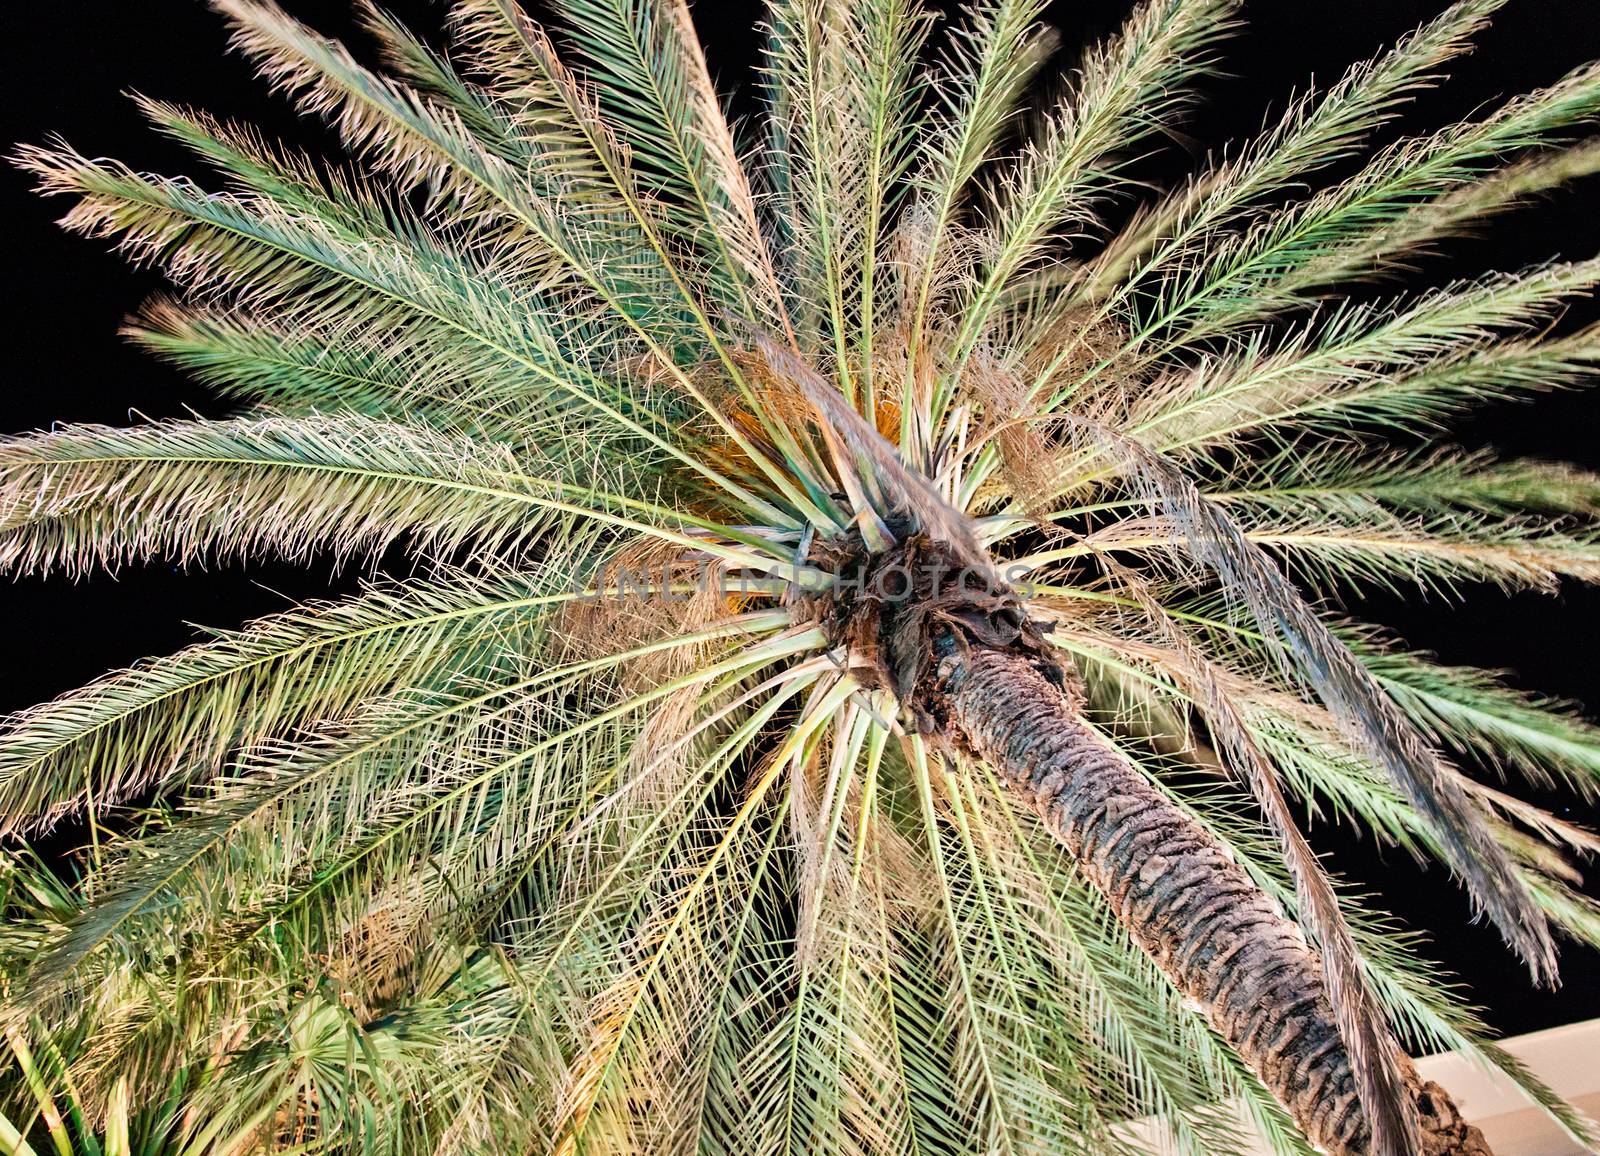 Underlit palm trees waving in wind at a resort hotel in Palm Desert